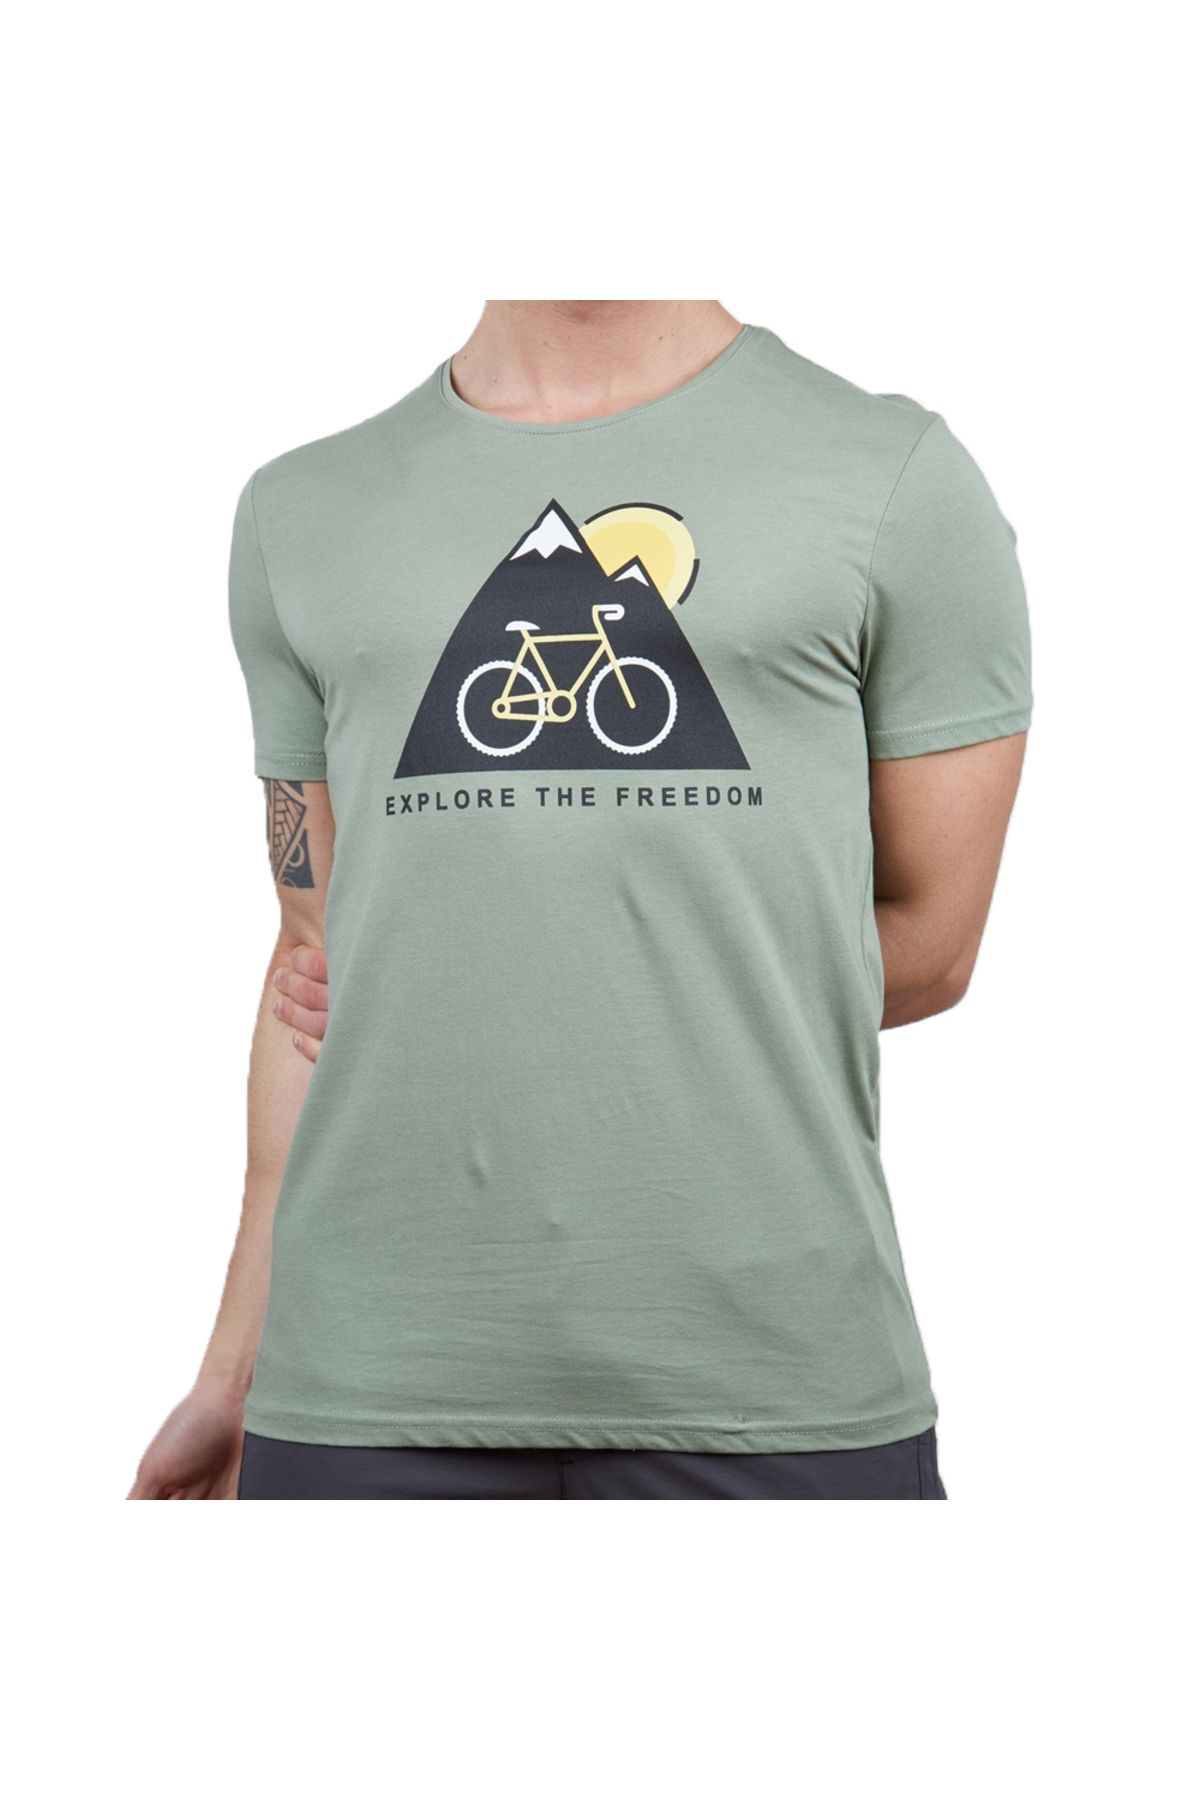 Genel Markalar Outdoor 600608 Alpinist Tarius Erkek T-shirt Elma Yeşili S